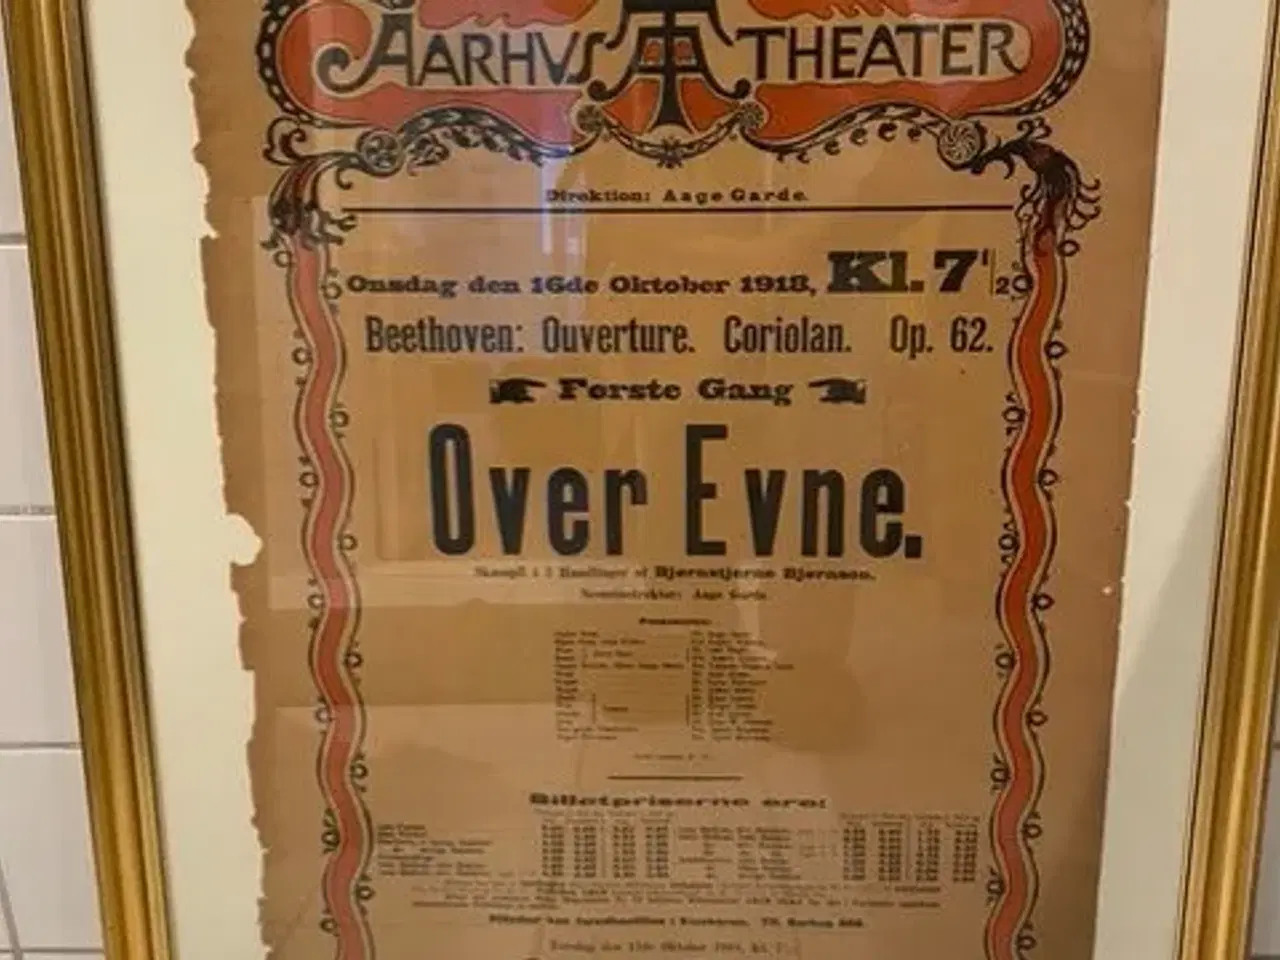 Billede 2 - Aarhus Theater plakat fra 1918